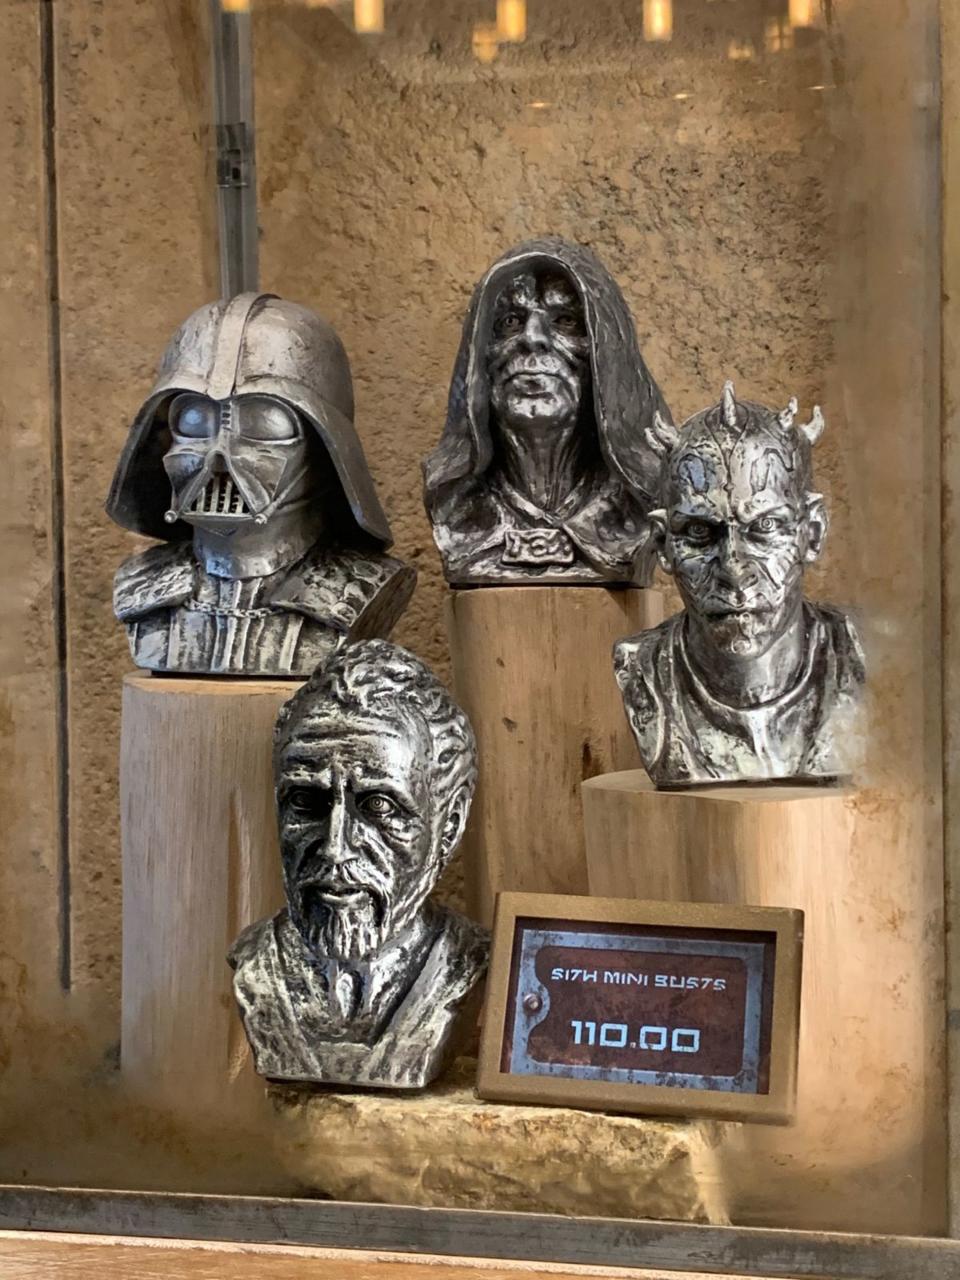 9. Sith mini-busts